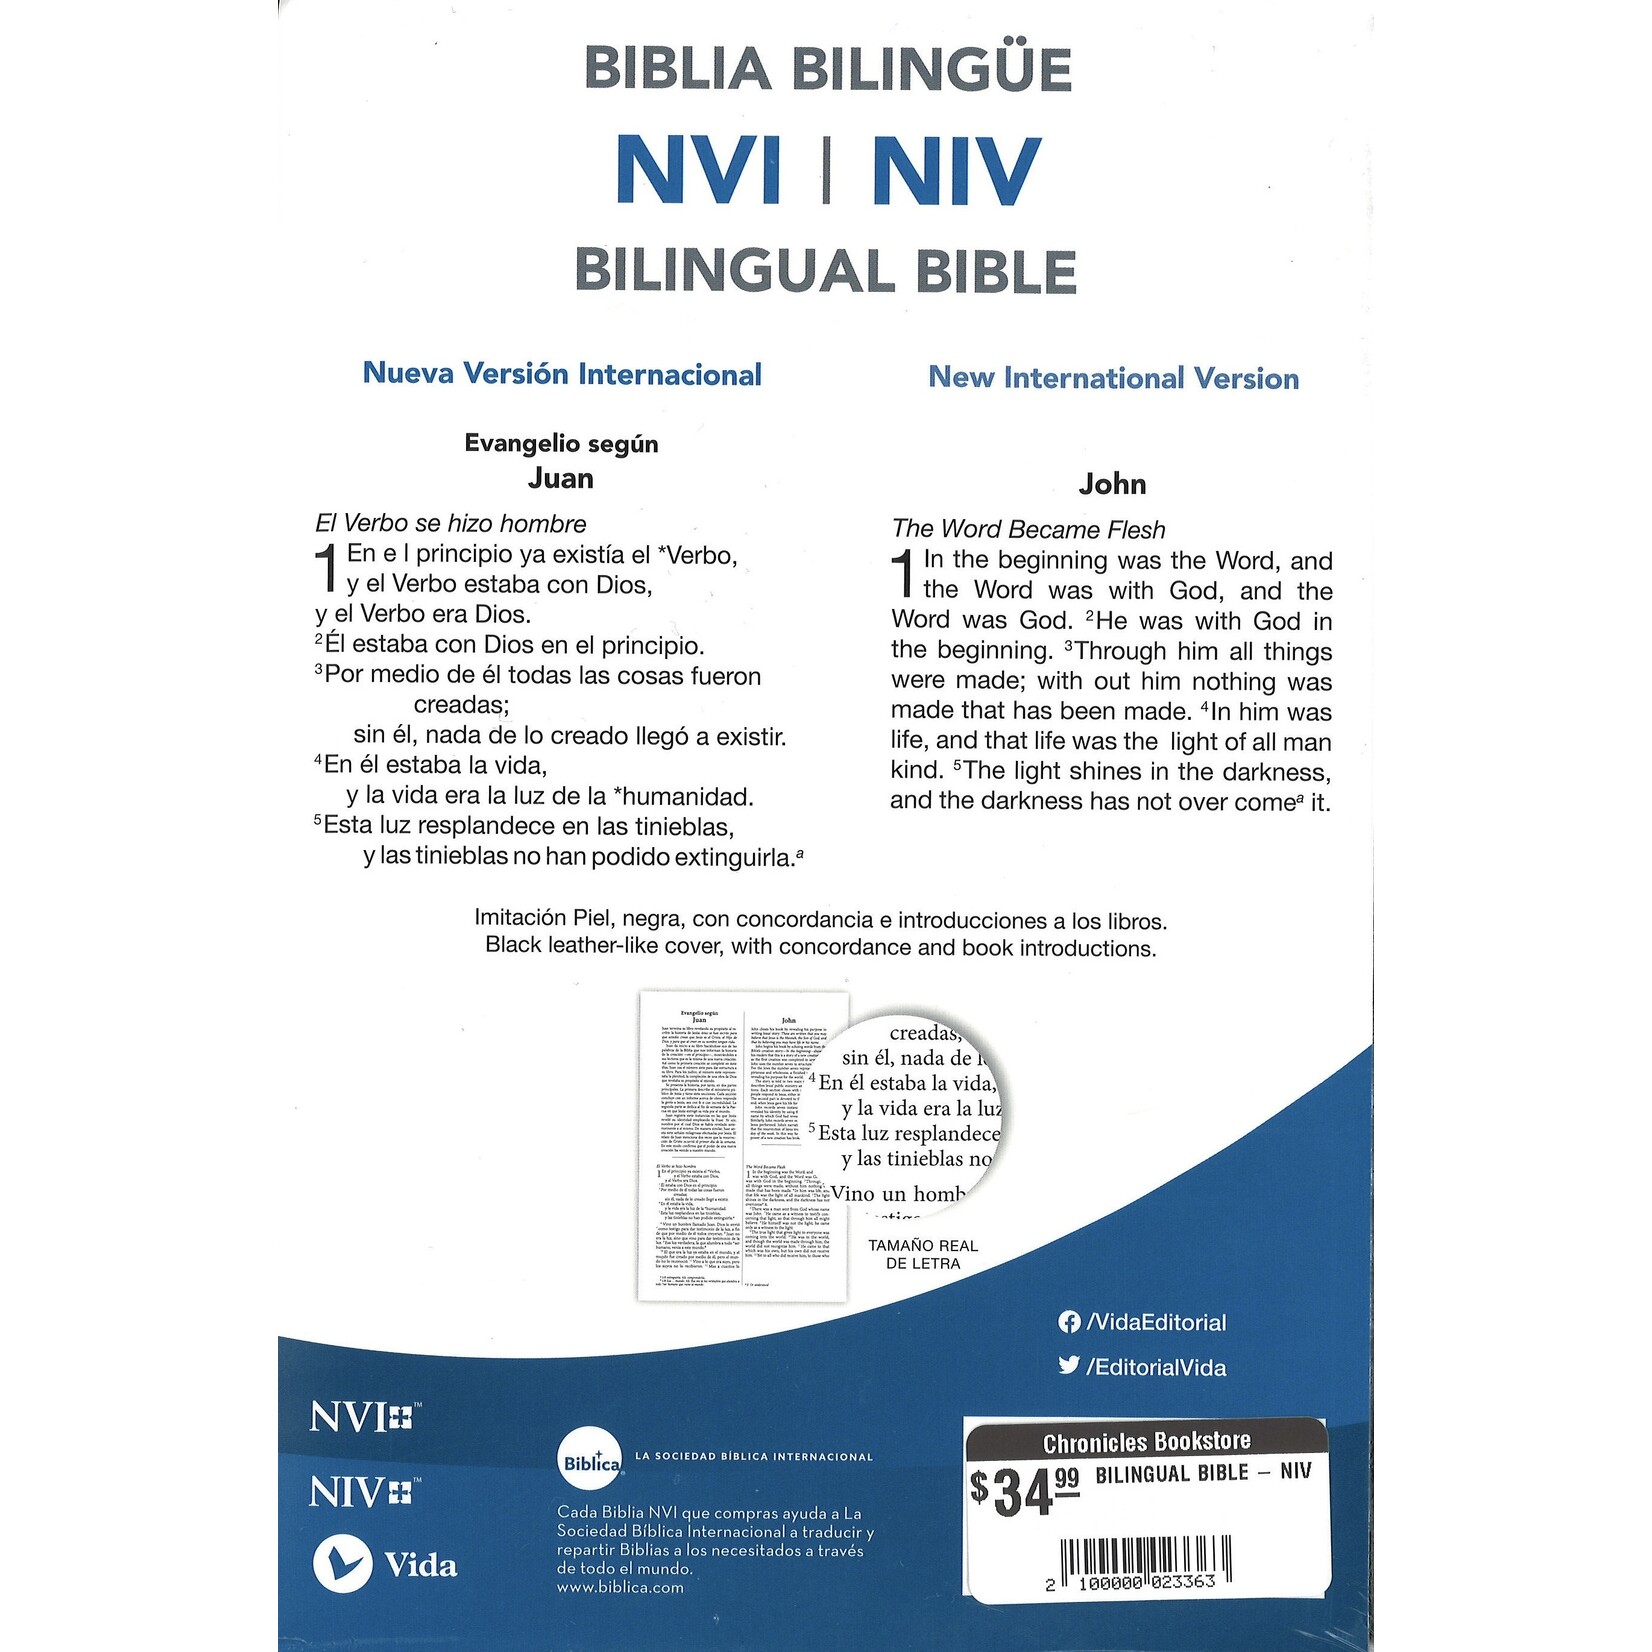 BILINGUAL BIBLE - NIV